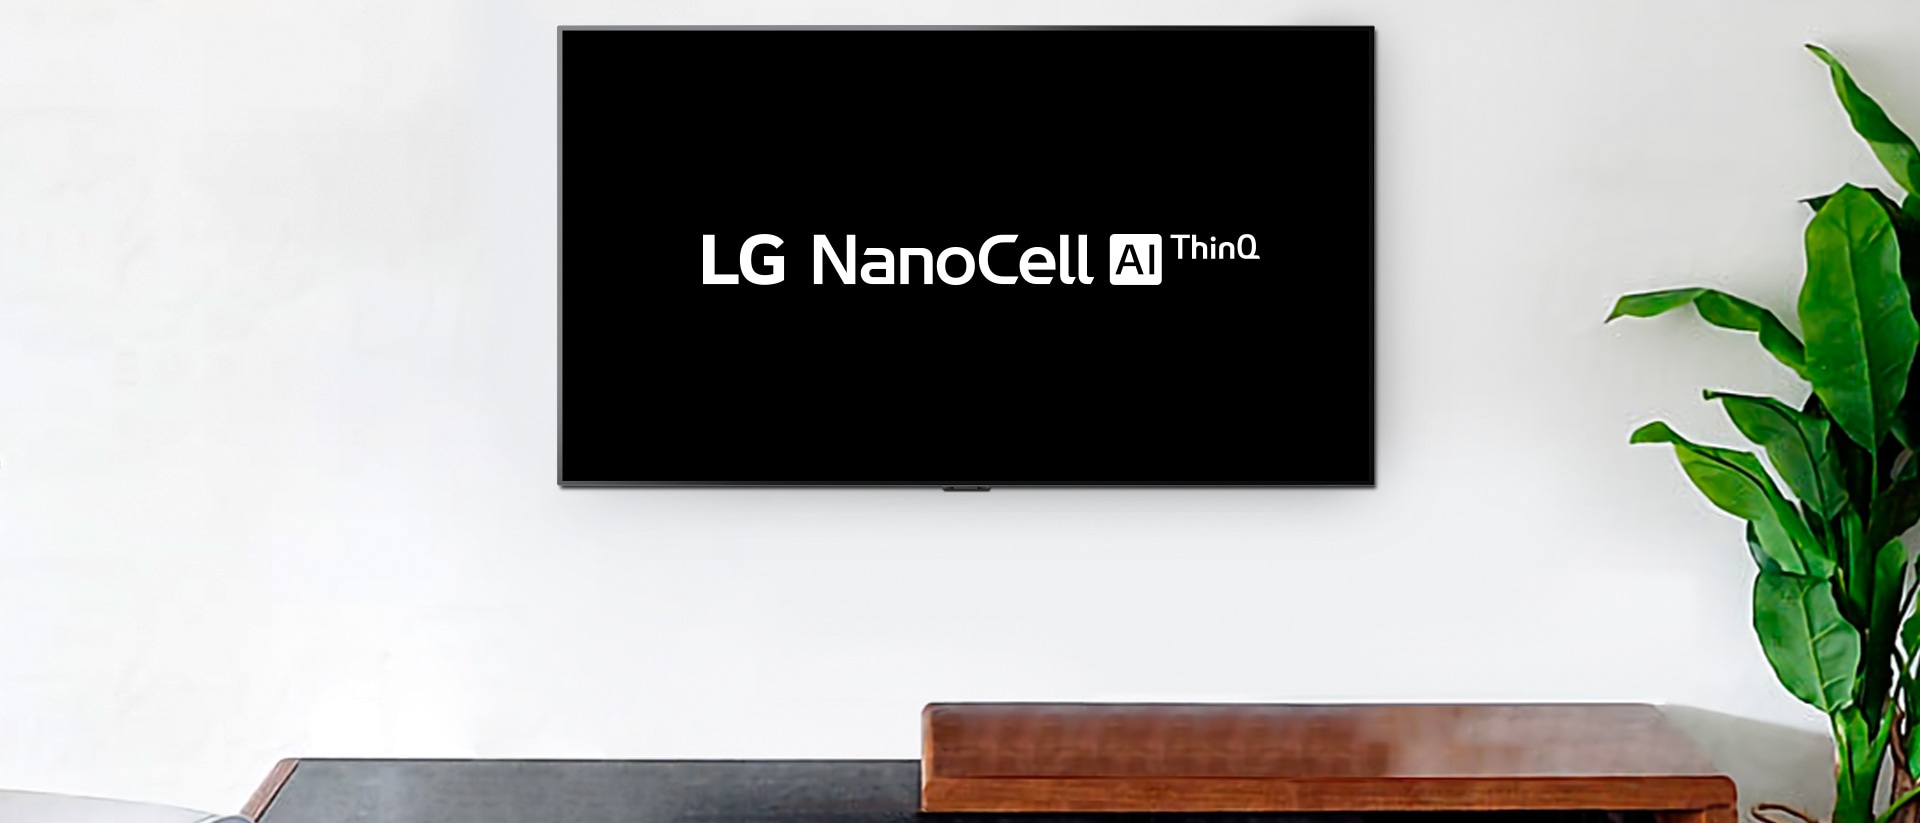 Väggmonterad TV som visar LG OLED AI ThinQ:s logotyp mot svart bakgrund